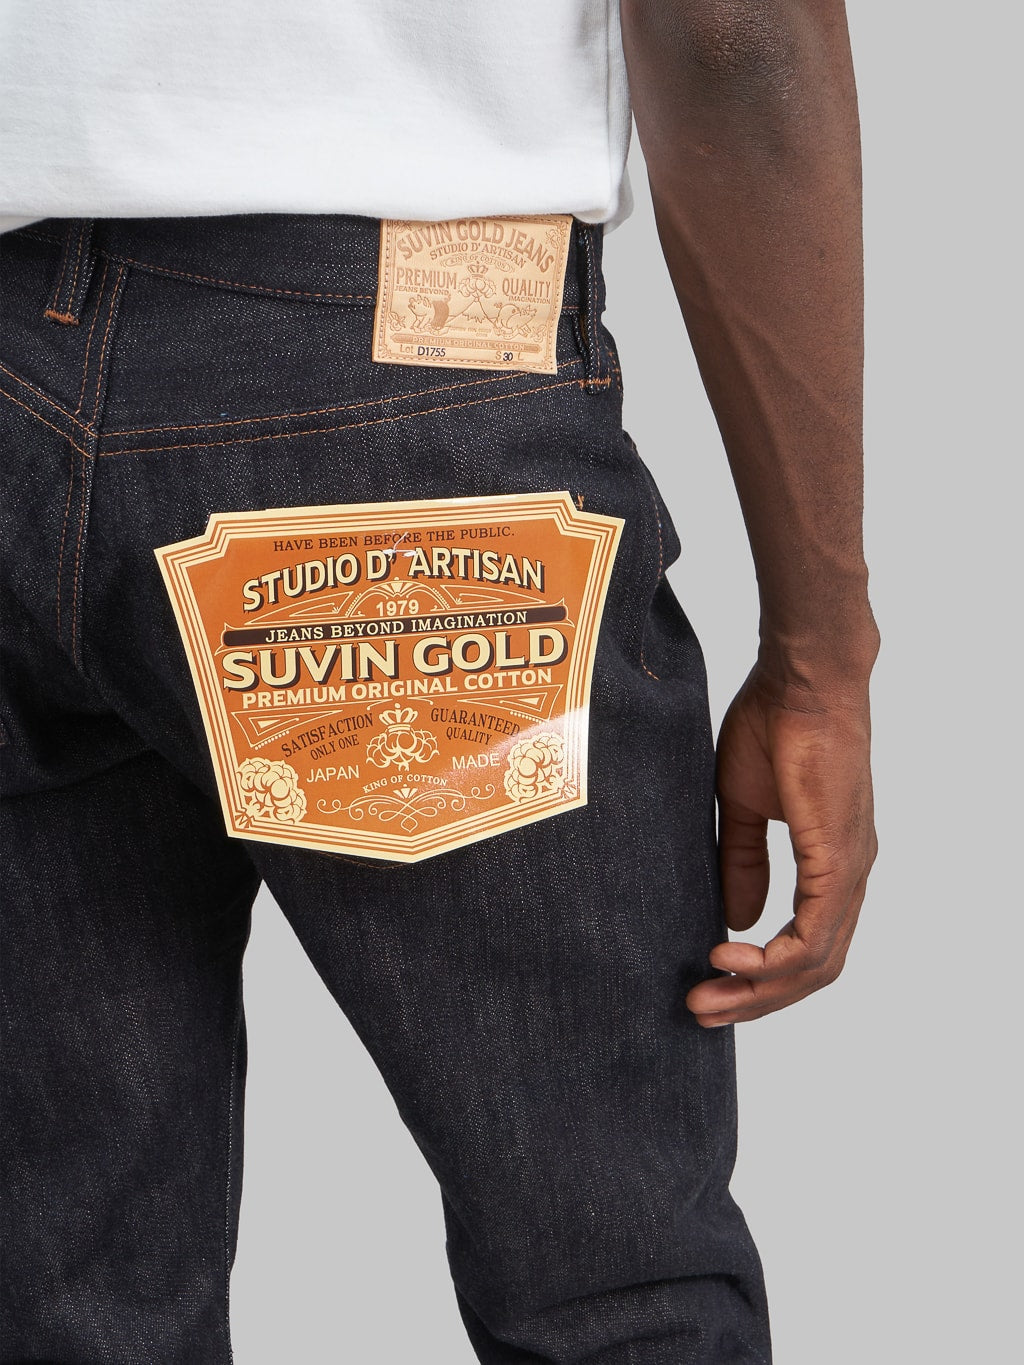 Studio DArtisan Suvin Gold D1755 Regular Straight Narrow Jeans back details